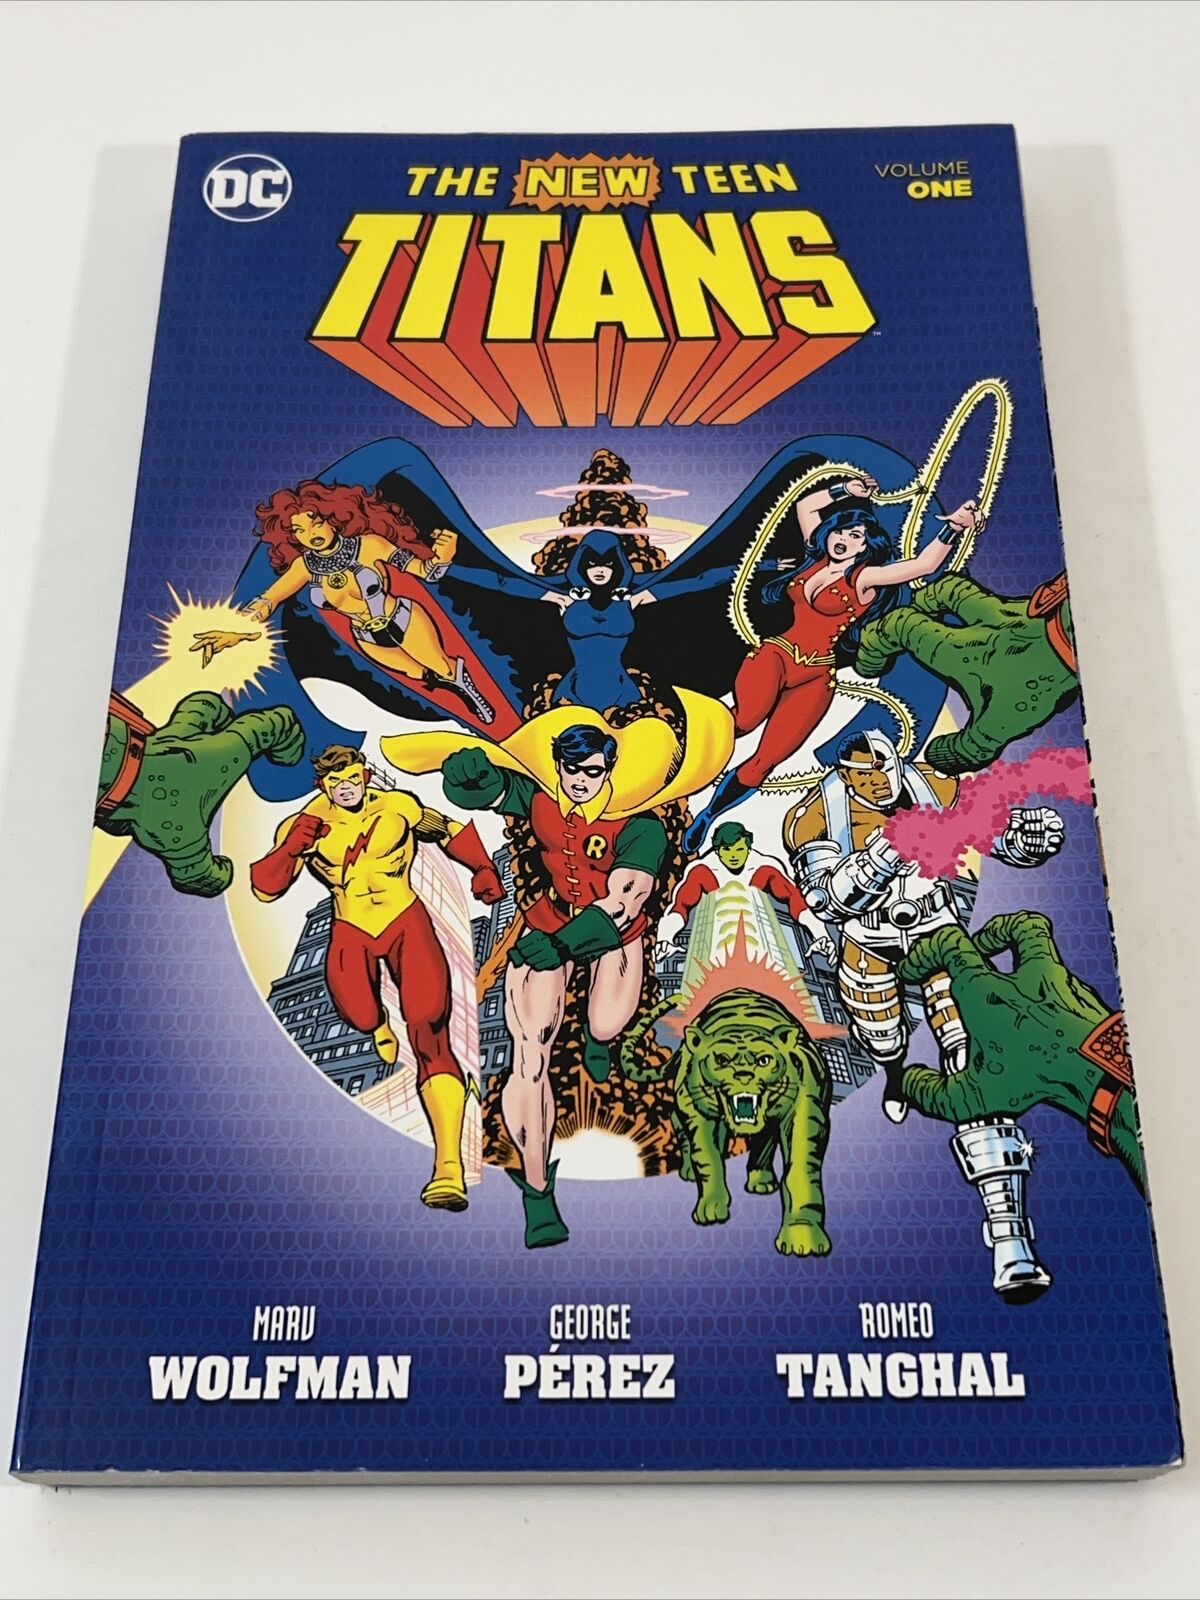 The New Teen Titans - Volume 1 (DC Comics, November 2014)